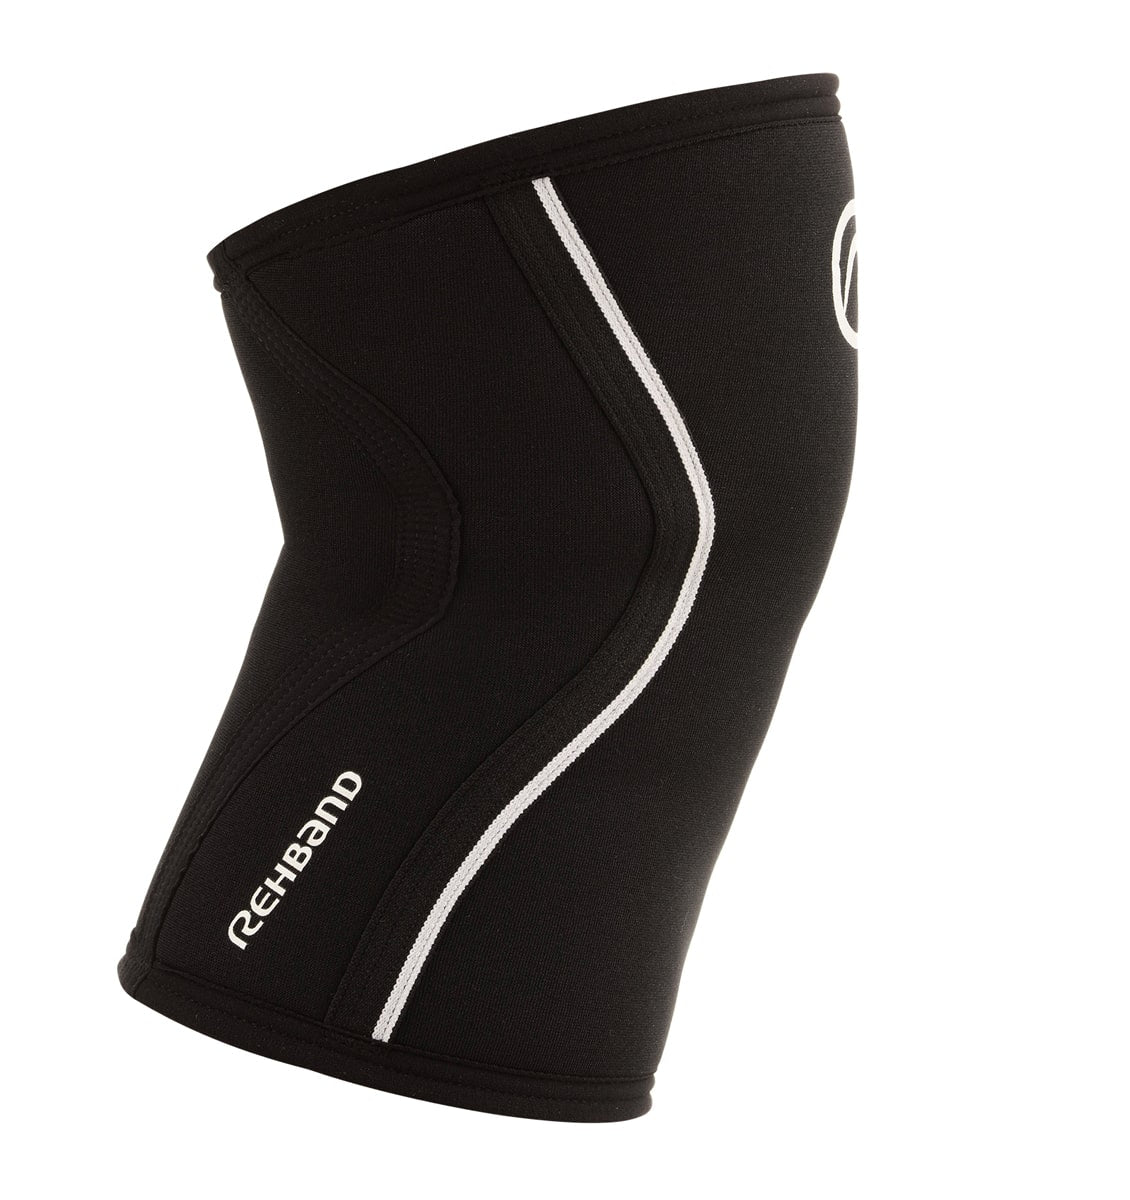 105306-03 - Rehband Rx Knee Sleeve - Black - 5mm - Side